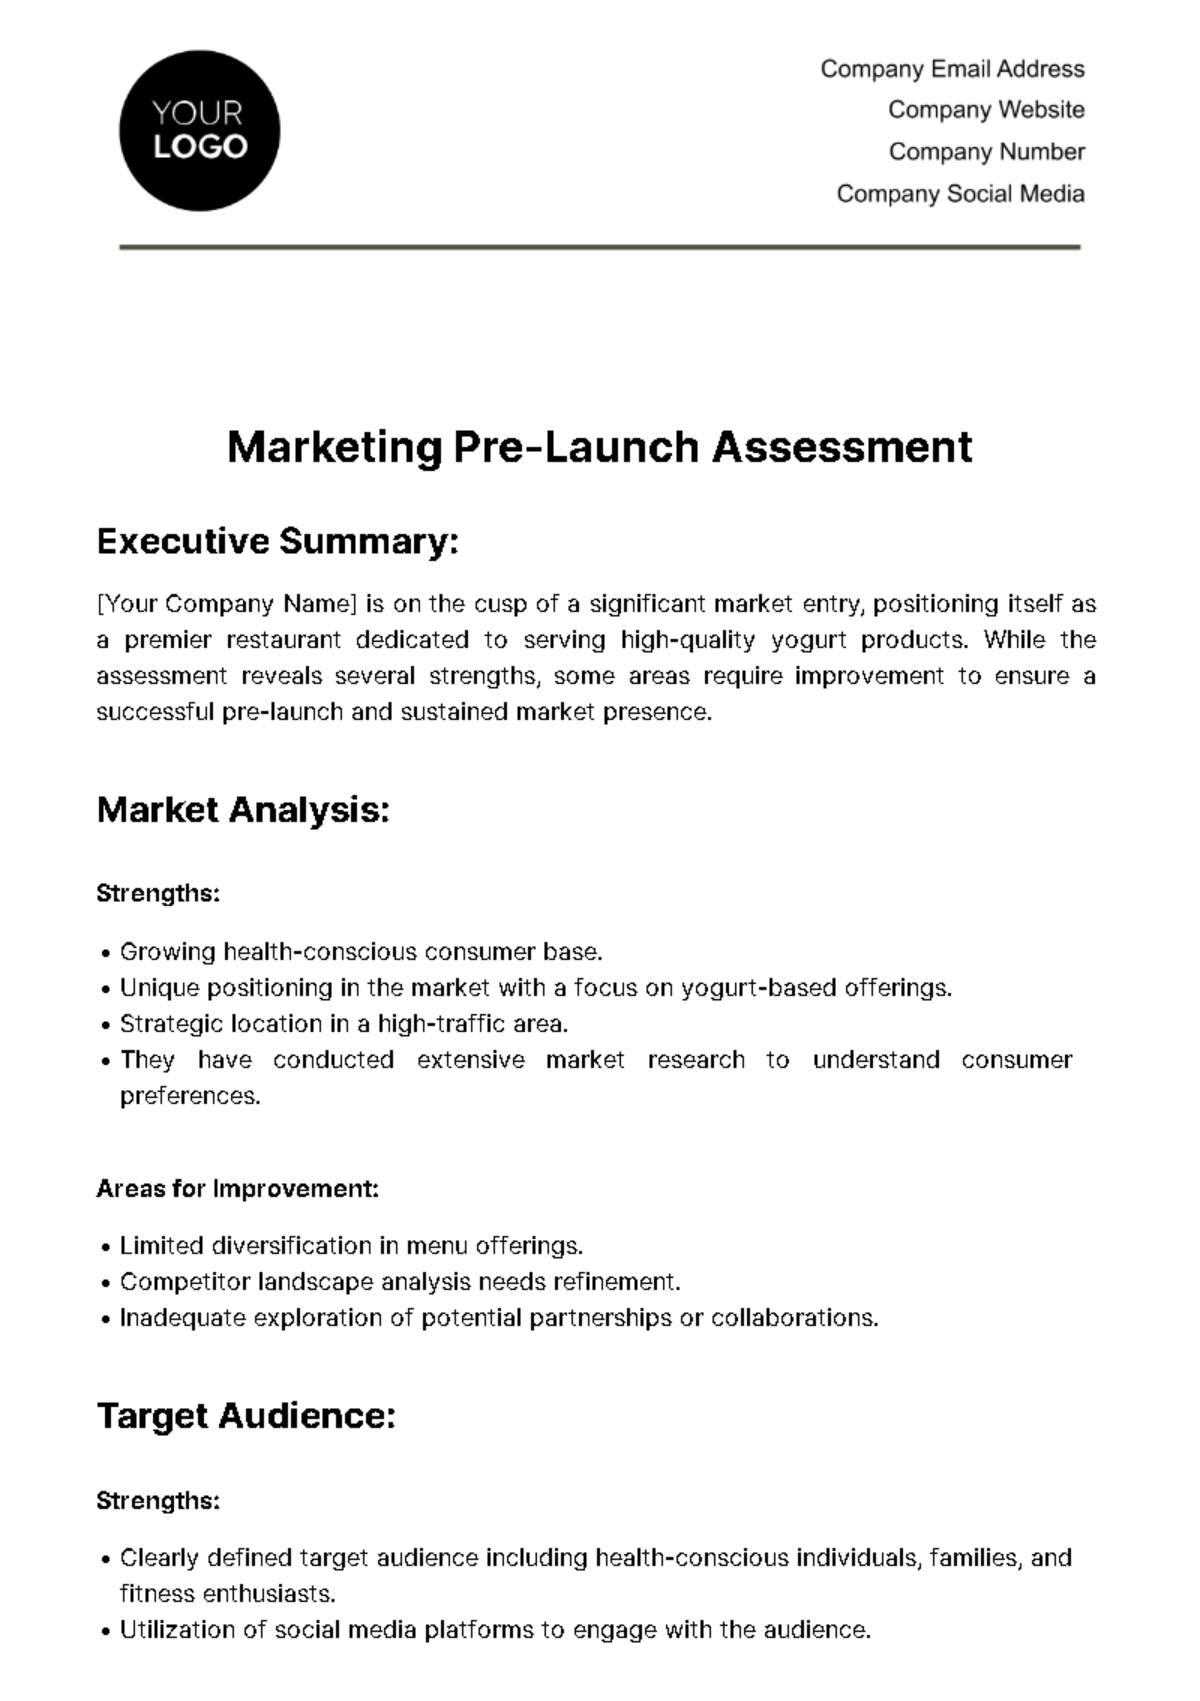 Marketing Pre-launch Assessment Template